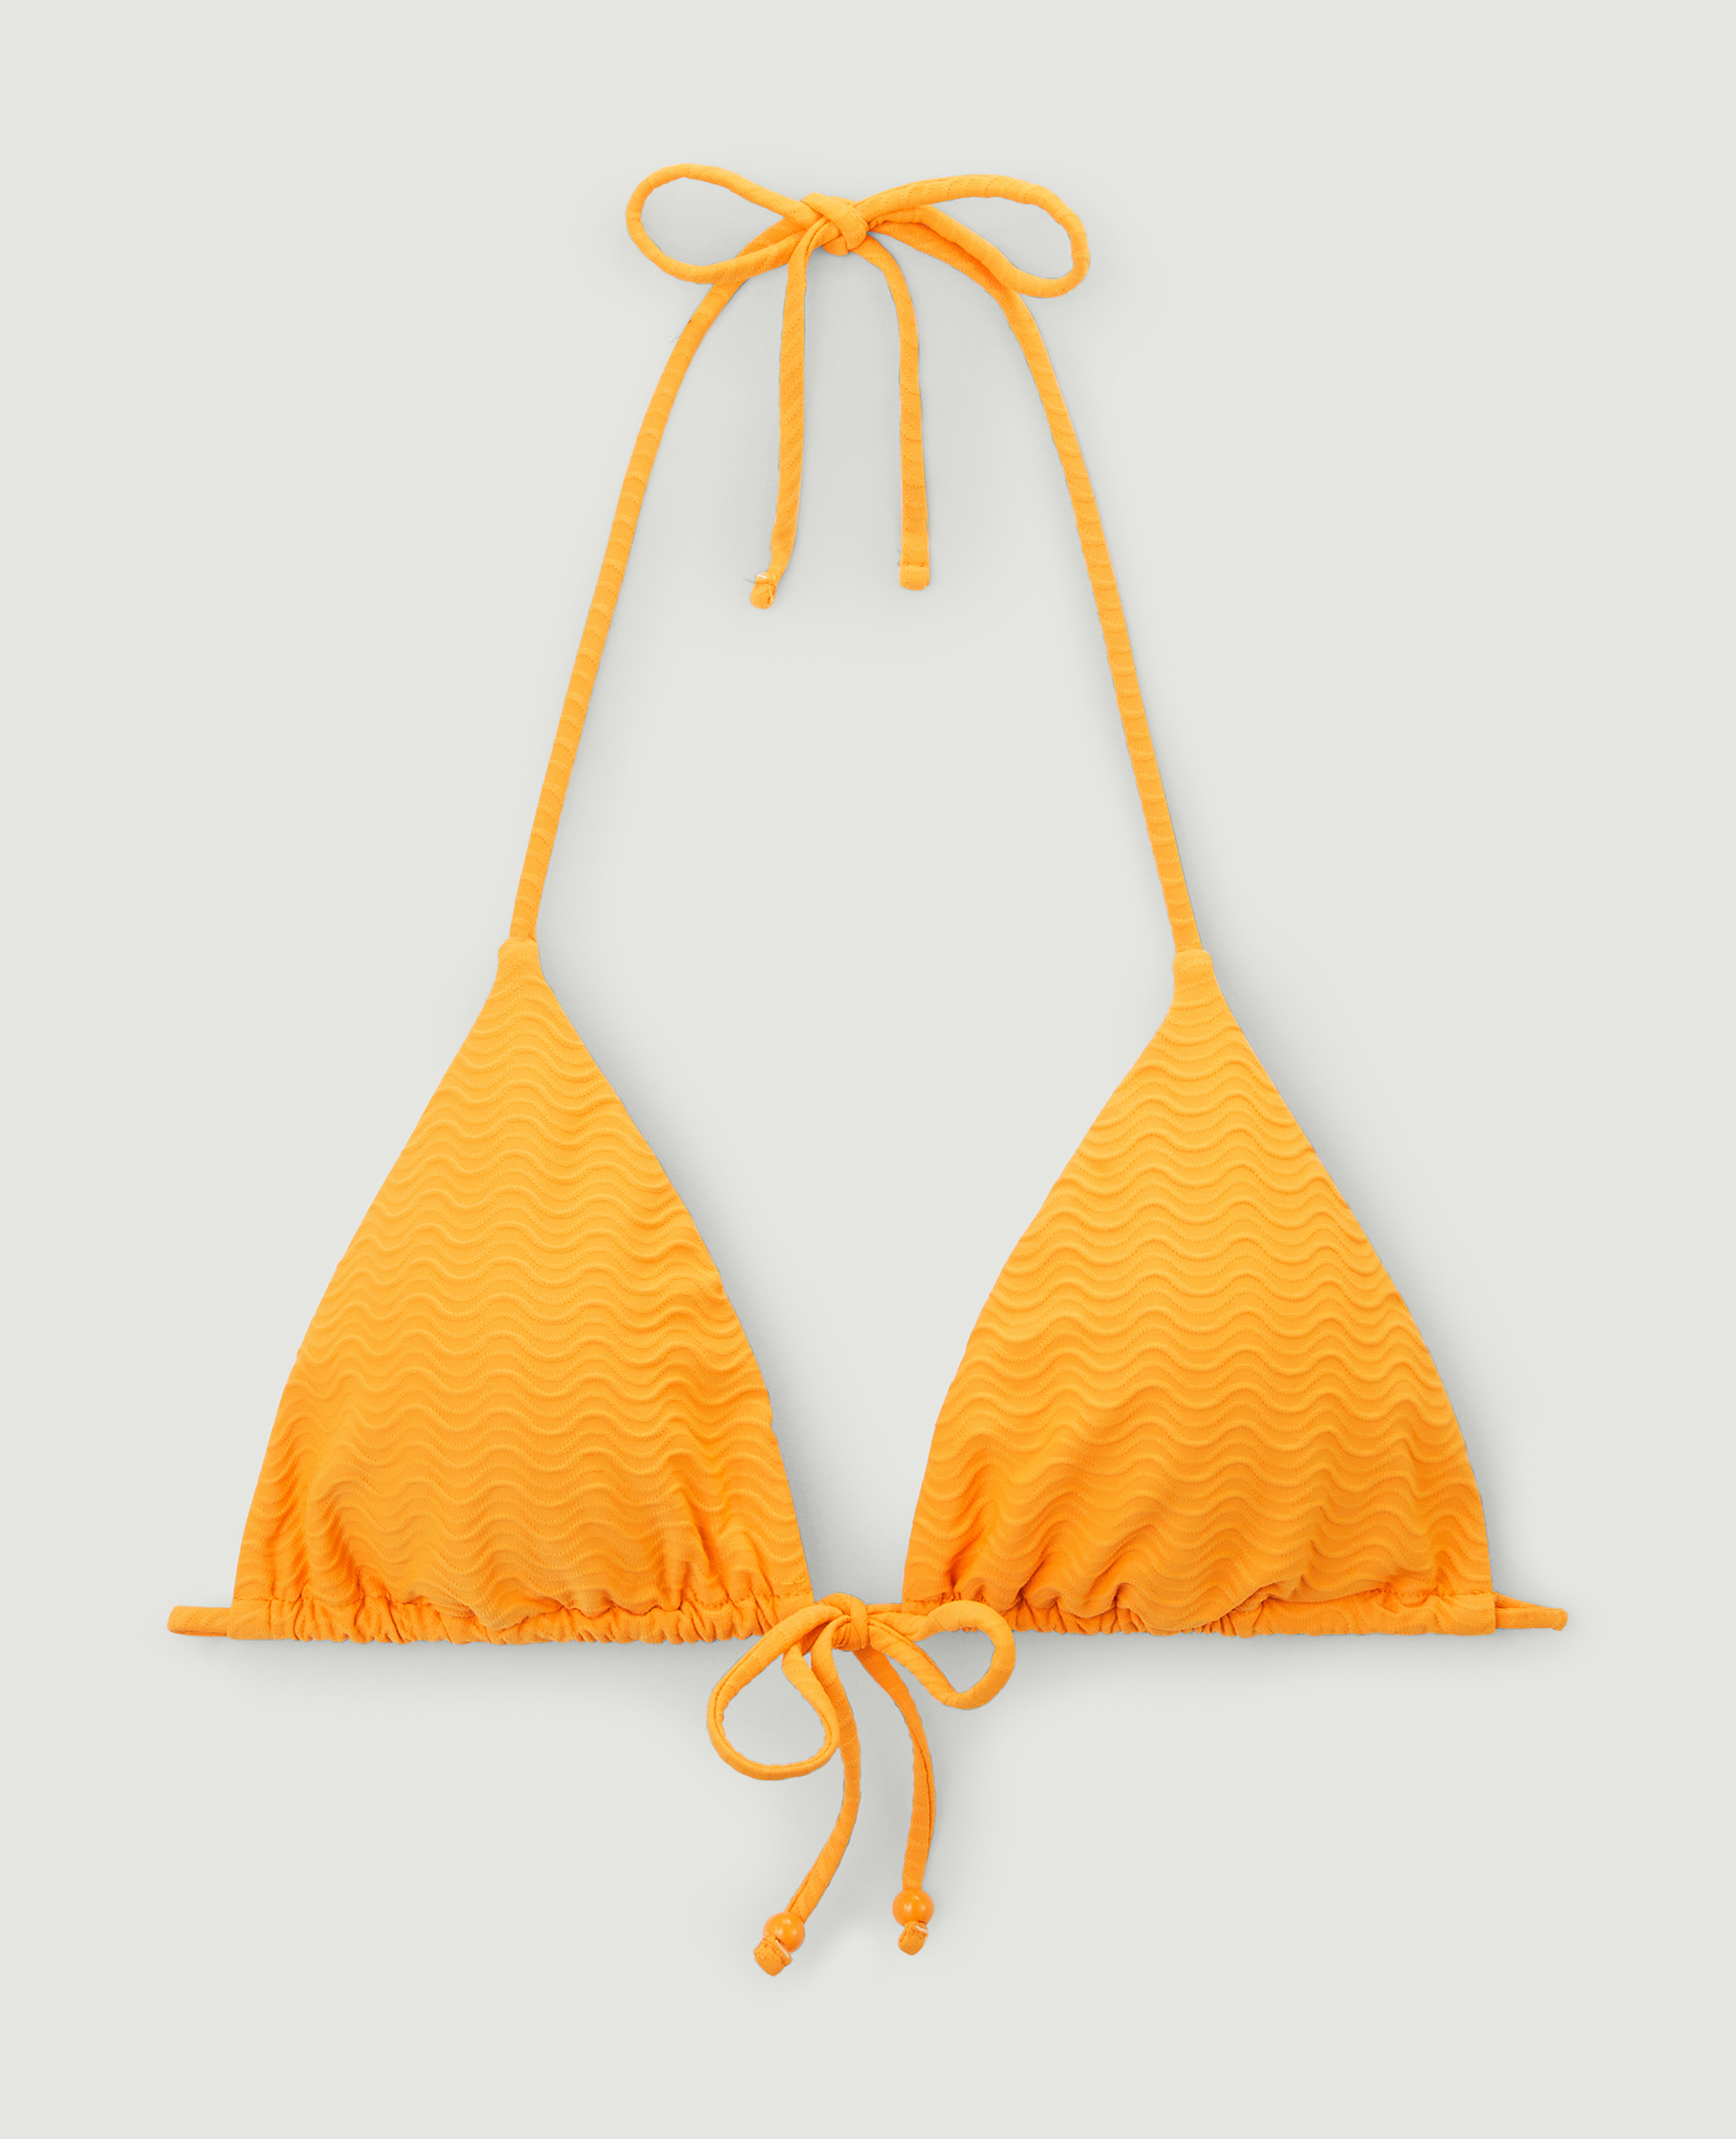 Haut de maillot de bain triangle orange - Pimkie